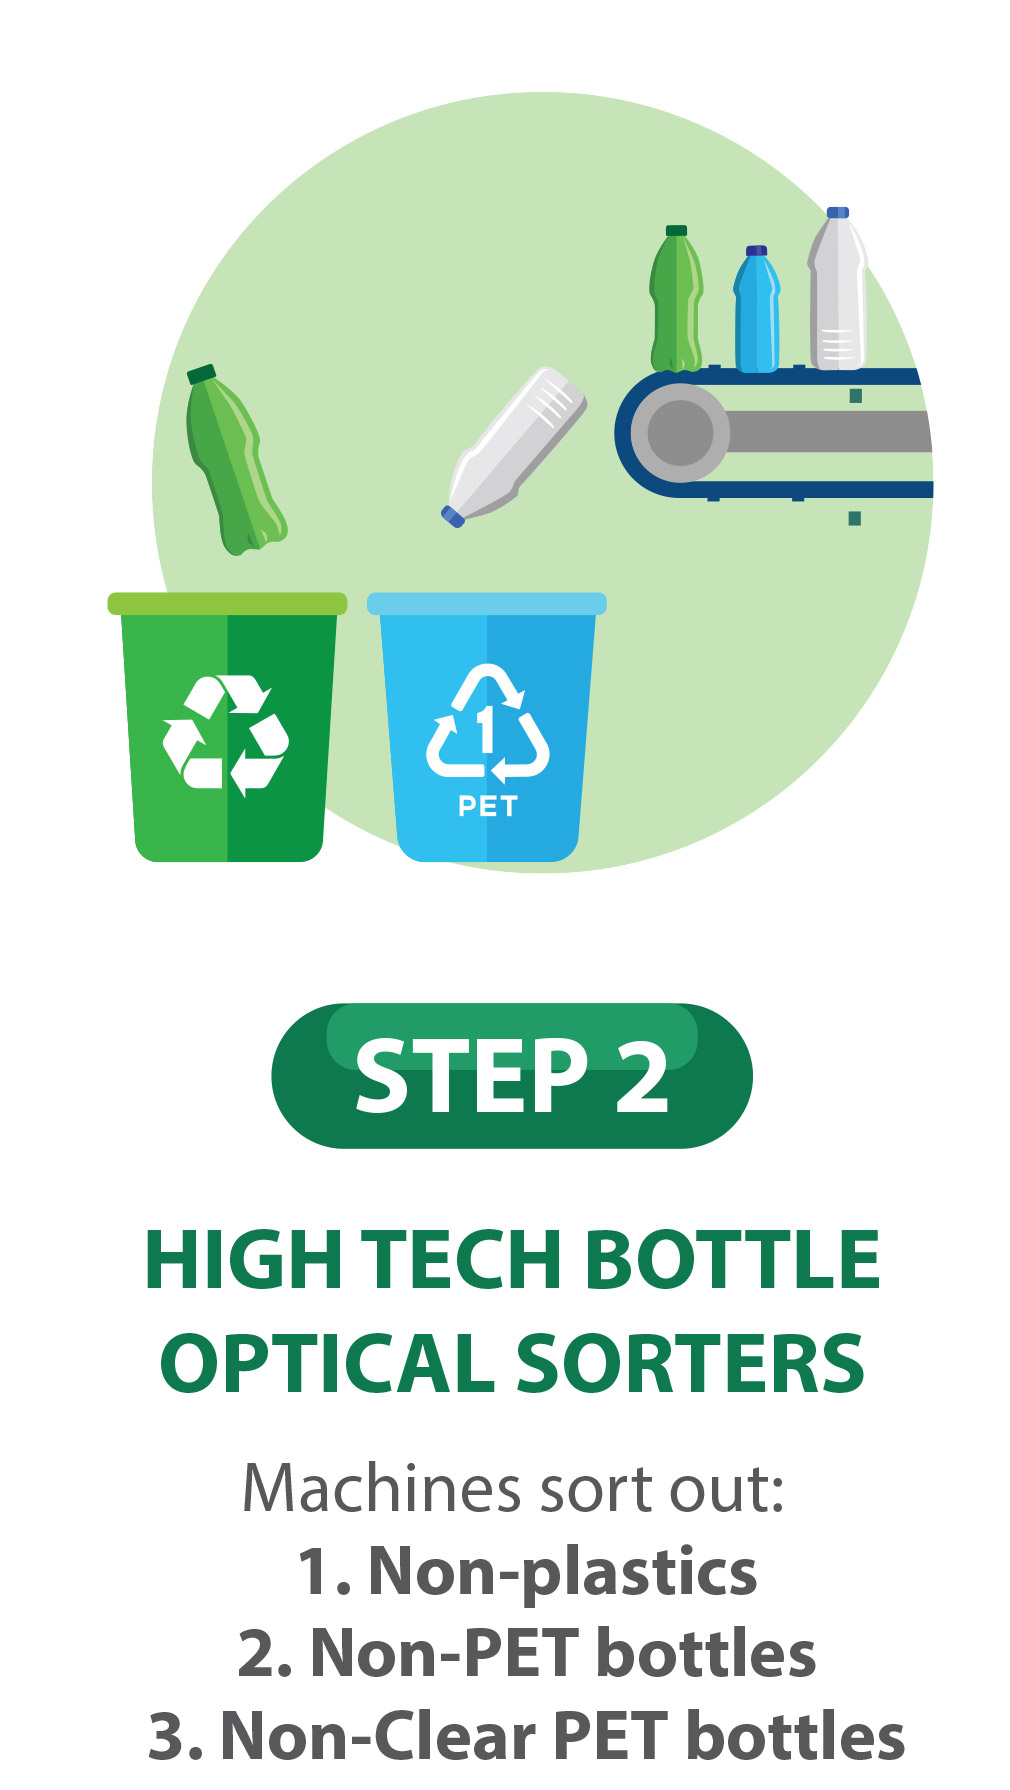 Step 2 High Tech Bottle Optical Sorters